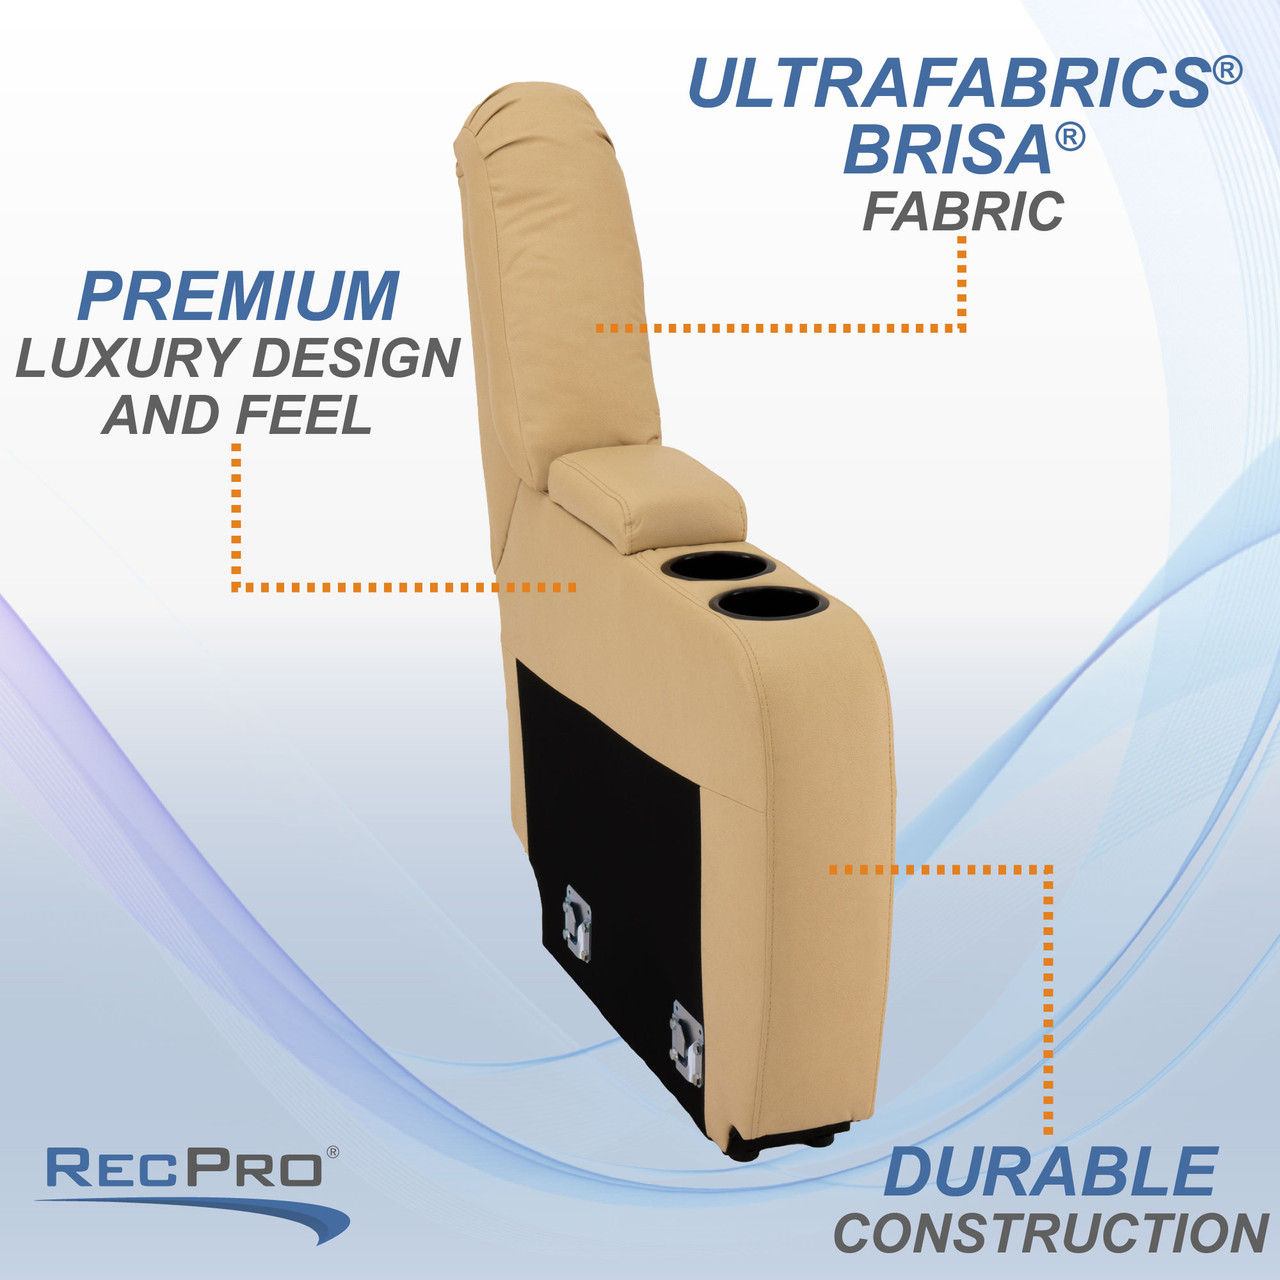 RV Furniture Portable Cup Holders in Ultrafabrics Brisa